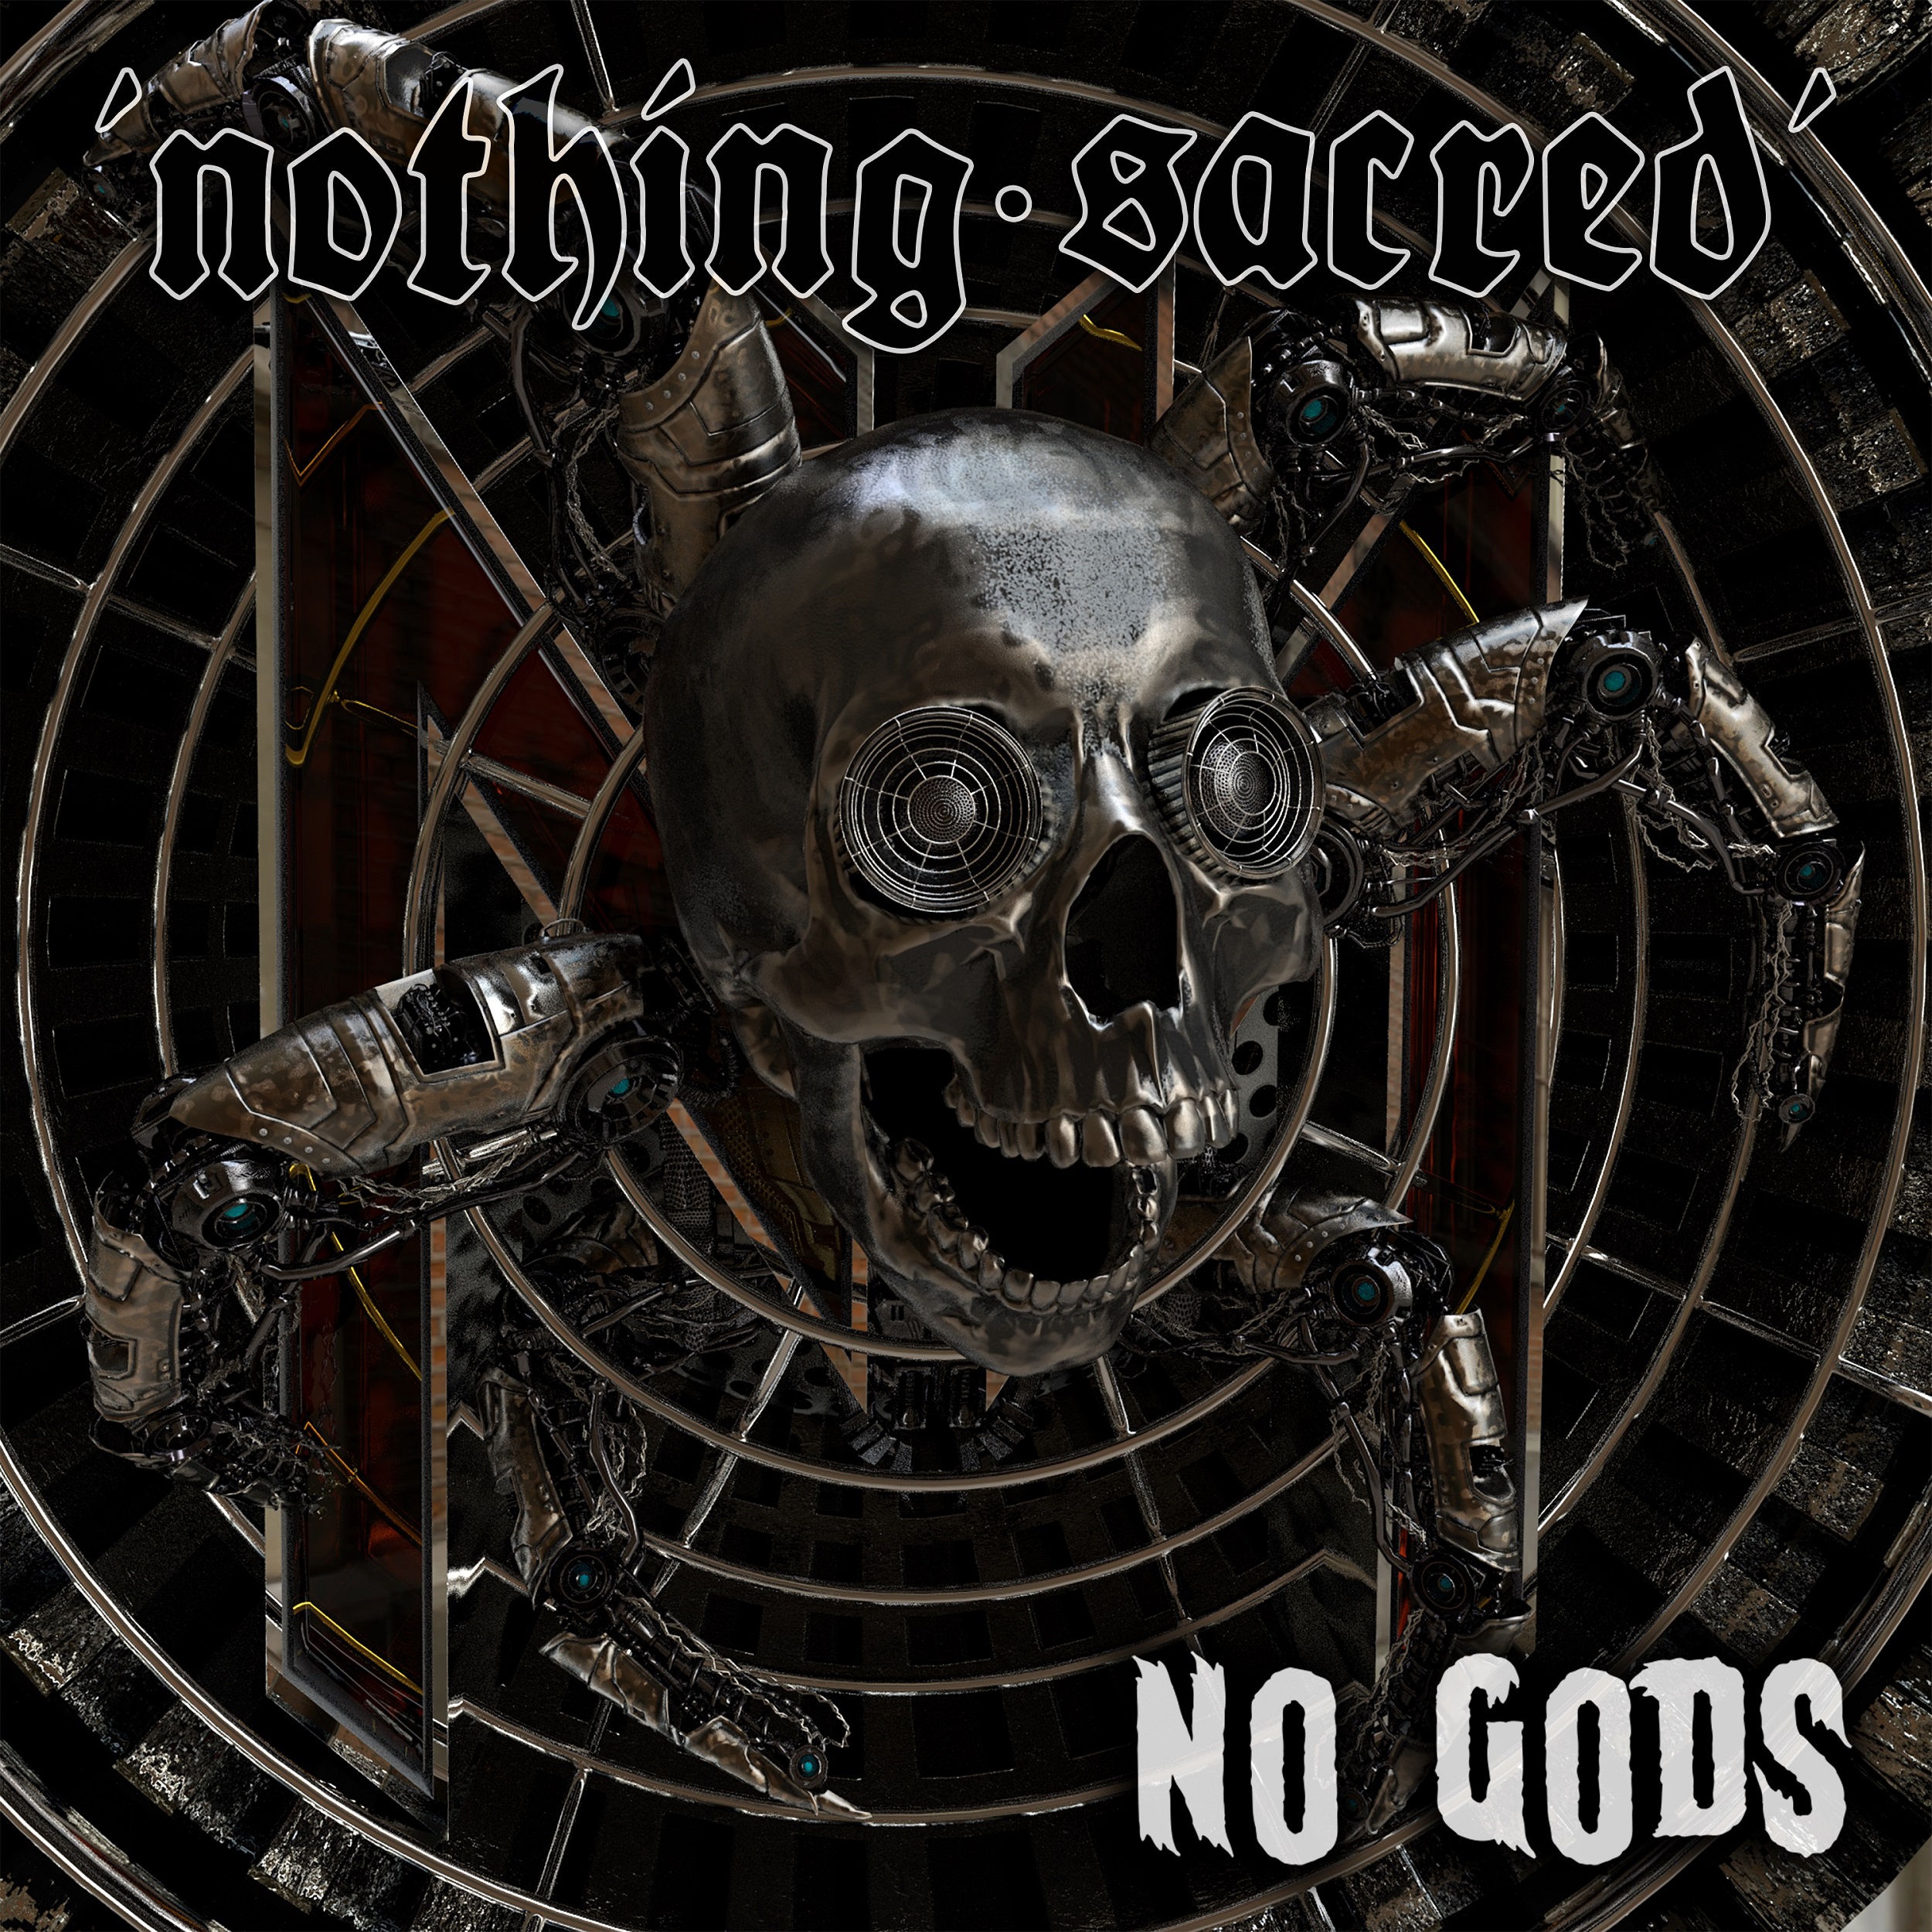 Art for No Gods - Virus by Nothing Sacred